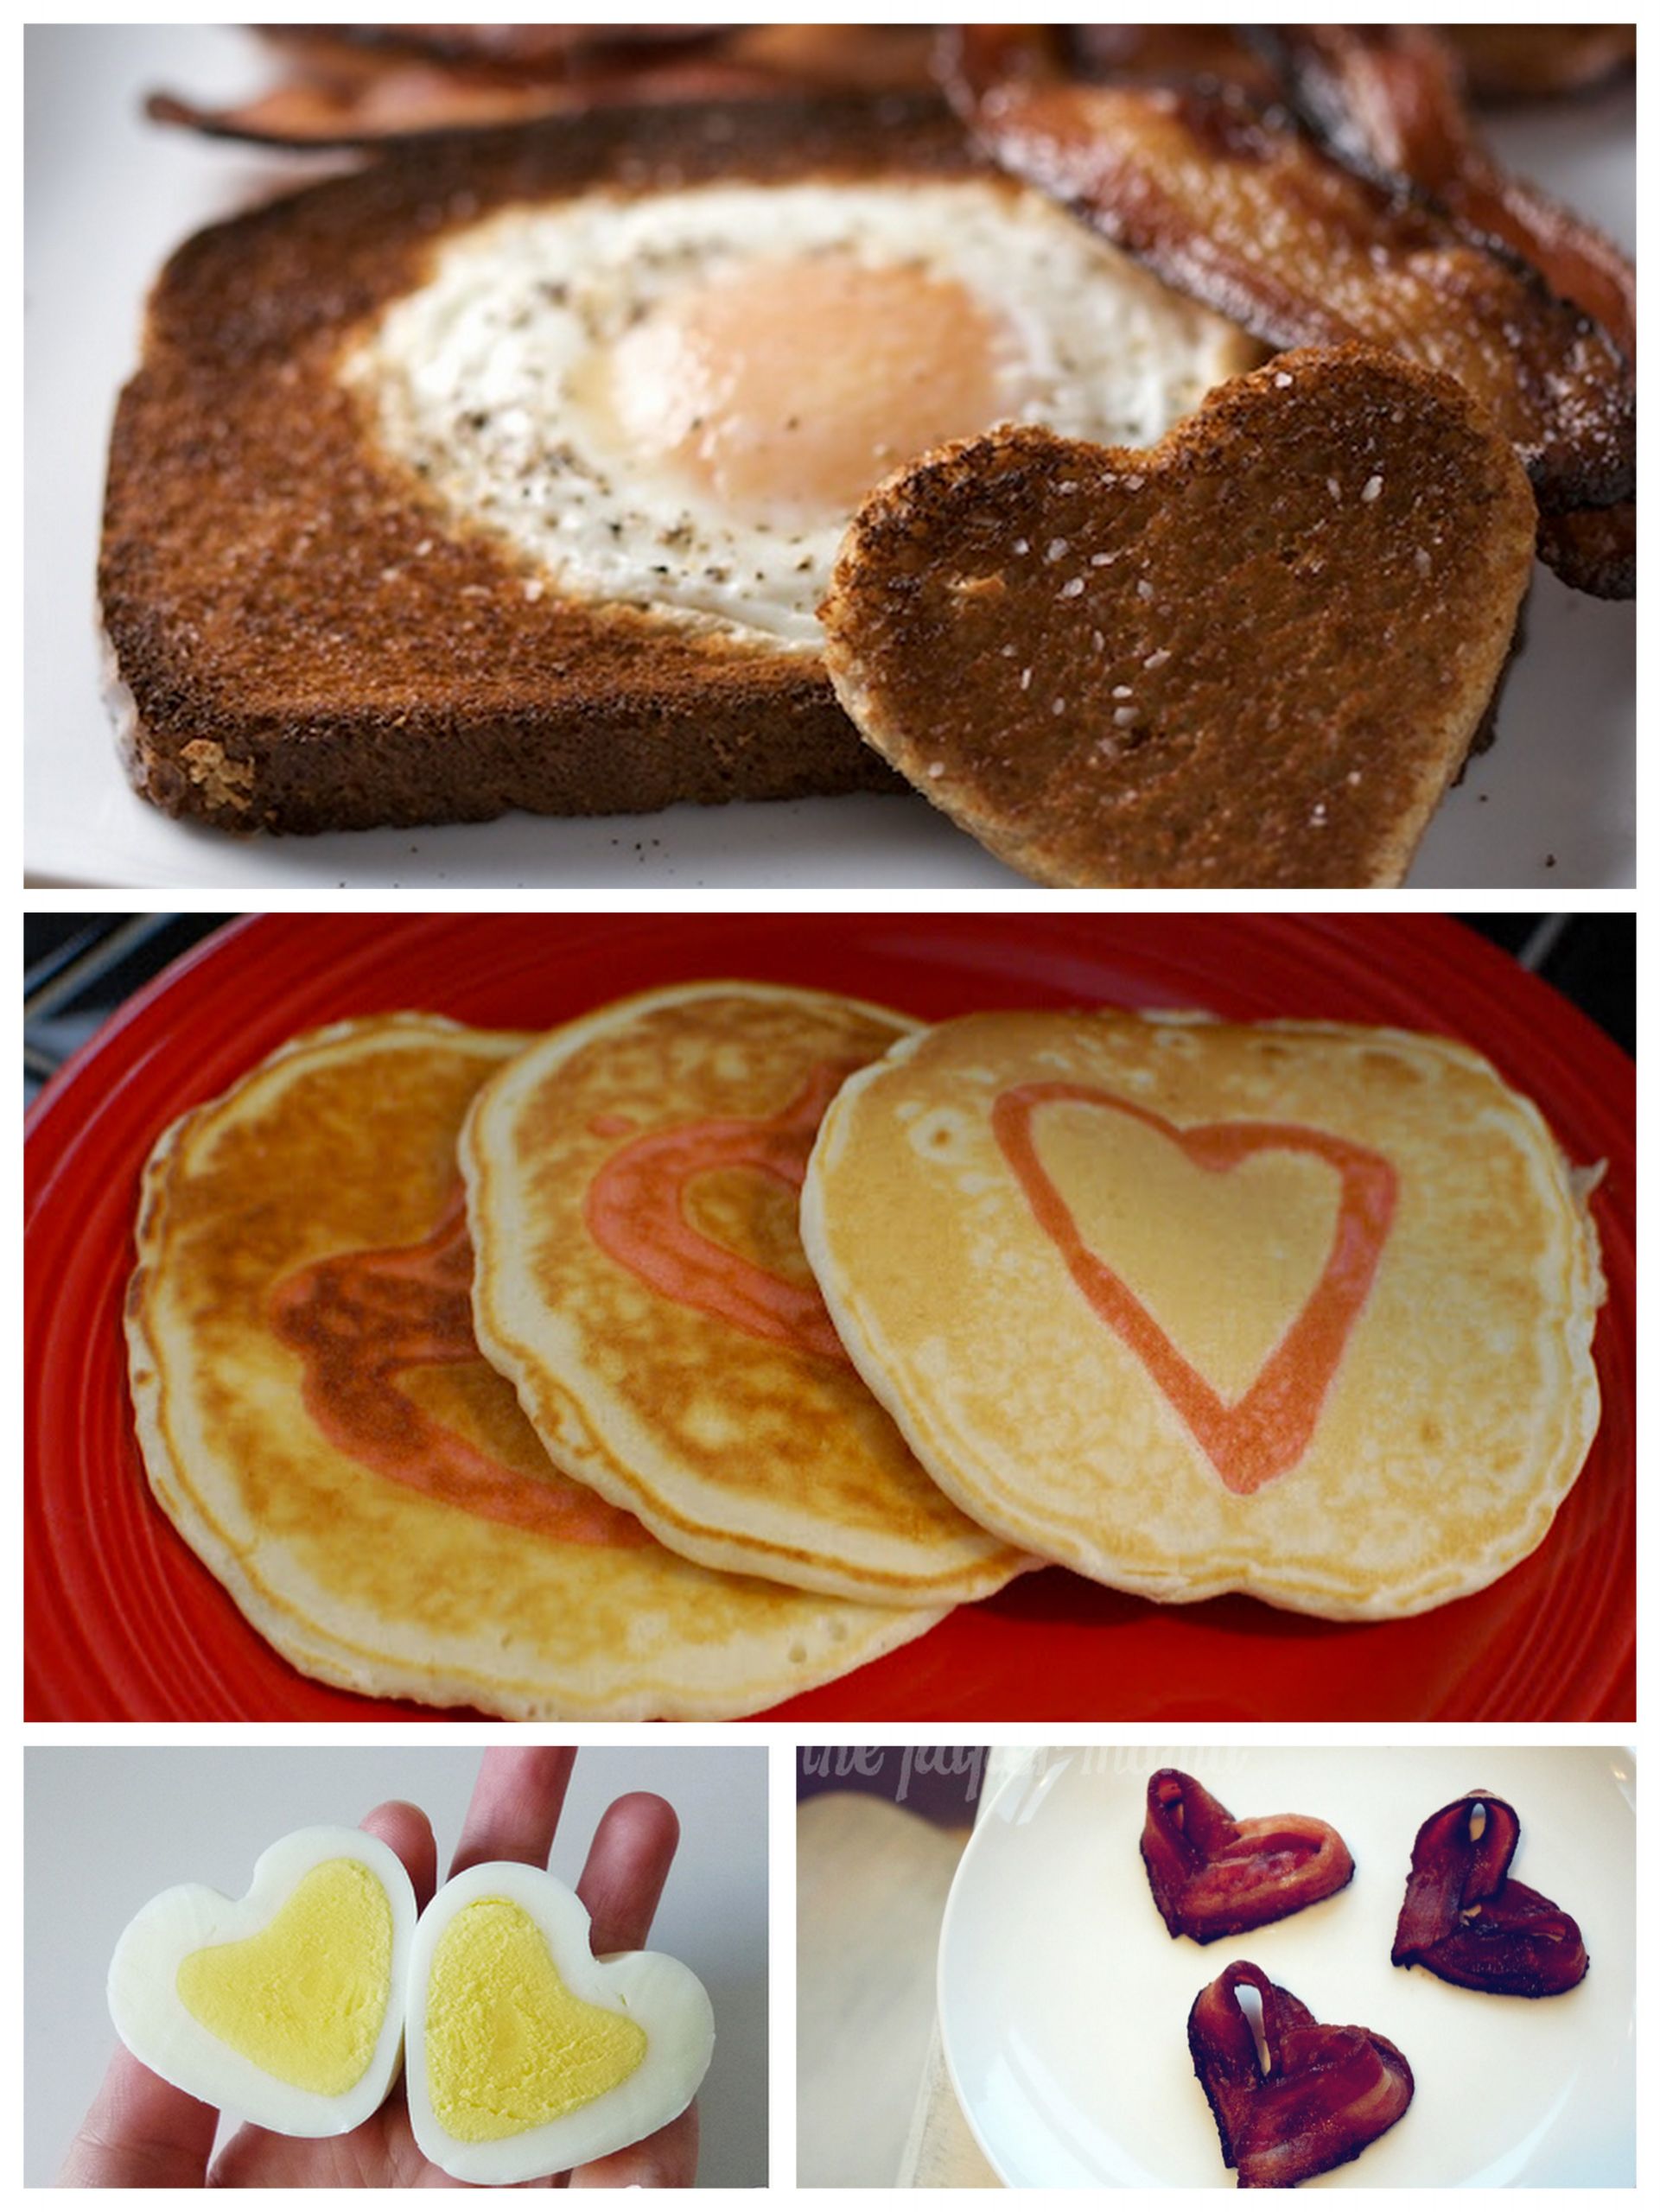 Valentines Day Food Ideas
 Valentine’s Day Food Ideas